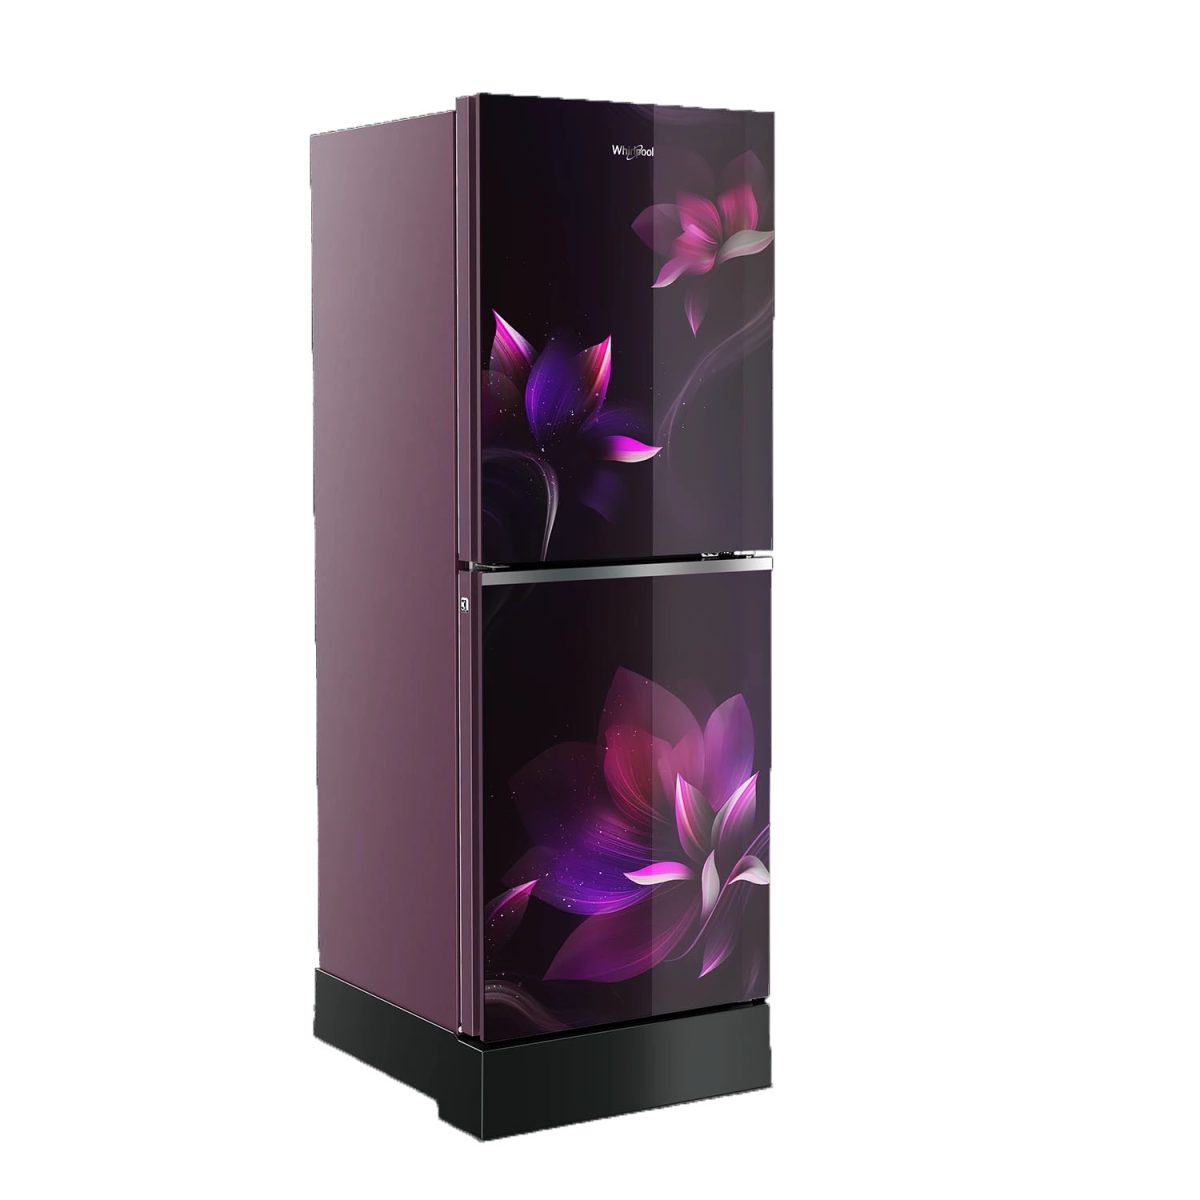 WHIRLPOOL 278 Liter Refrigerator FreshMagic Pro Inv Floret Purple, Best Refrigerators of Year, Top-rated Refrigerators, Refrigerator Reviews, Refrigerator Comparison, Buying a Refrigerator Guide, Refrigerator Deals and Offers WHIRLPOOL 257 Liter Refrigerator FreshMagic Pro Floret Purple , Best Refrigerators of Year, Top-rated Refrigerators, Refrigerator Reviews, Refrigerator Comparison, Buying a Refrigerator Guide, Refrigerator Deals and Offers WHIRLPOOL 236 Liter Refrigerator FreshMagic Pro Floret Purple , Best Refrigerators of Year, Top-rated Refrigerators, Refrigerator Reviews, Refrigerator Comparison, Buying a Refrigerator Guide, Refrigerator Deals and Offers Best Refrigerators of Year, Top-rated Refrigerators, Refrigerator Reviews, Refrigerator Comparison, Buying a Refrigerator Guide, Refrigerator Deals and Offers, Best refrigerators in Chittagong, Best selling refrigerators in Chittagong, Best Electronics Store in Chittagong, Meem Electronics, MeemElectronics, Best Deal of Refrigerator, WHIRLPOOL Refrigerator price in Chittagong, WHIRLPOOL Refrigerator price in Bangladersh, 278 Liter Refrigerator, WHIRLPOOL Refrigerator, 01919382008, 01919382009, 019193820010 Best Refrigerators of Year, Top-rated Refrigerators, Refrigerator Reviews, Refrigerator Comparison, Buying a Refrigerator Guide, Refrigerator Deals and Offers, Best refrigerators in Chittagong, Best selling refrigerators in Chittagong, Best Electronics Store in Chittagong, Meem Electronics, MeemElectronics, Best Deal of Refrigerator, WHIRLPOOL Refrigerator price in Chittagong, WHIRLPOOL Refrigerator price in Bangladersh, 257 Liter Refrigerator, WHIRLPOOL Refrigerator, 01919382008, 01919382009, 019193820010 Best Refrigerators of Year, Top-rated Refrigerators, Refrigerator Reviews, Refrigerator Comparison, Buying a Refrigerator Guide, Refrigerator Deals and Offers, Best refrigerators in Chittagong, Best selling refrigerators in Chittagong, Best Electronics Store in Chittagong, Meem Electronics, MeemElectronics, Best Deal of Refrigerator, WHIRLPOOL Refrigerator price in Chittagong, WHIRLPOOL Refrigerator price in Bangladersh, 236 Liter Refrigerator, WHIRLPOOL Refrigerator, 01919382008, 01919382009, 019193820010